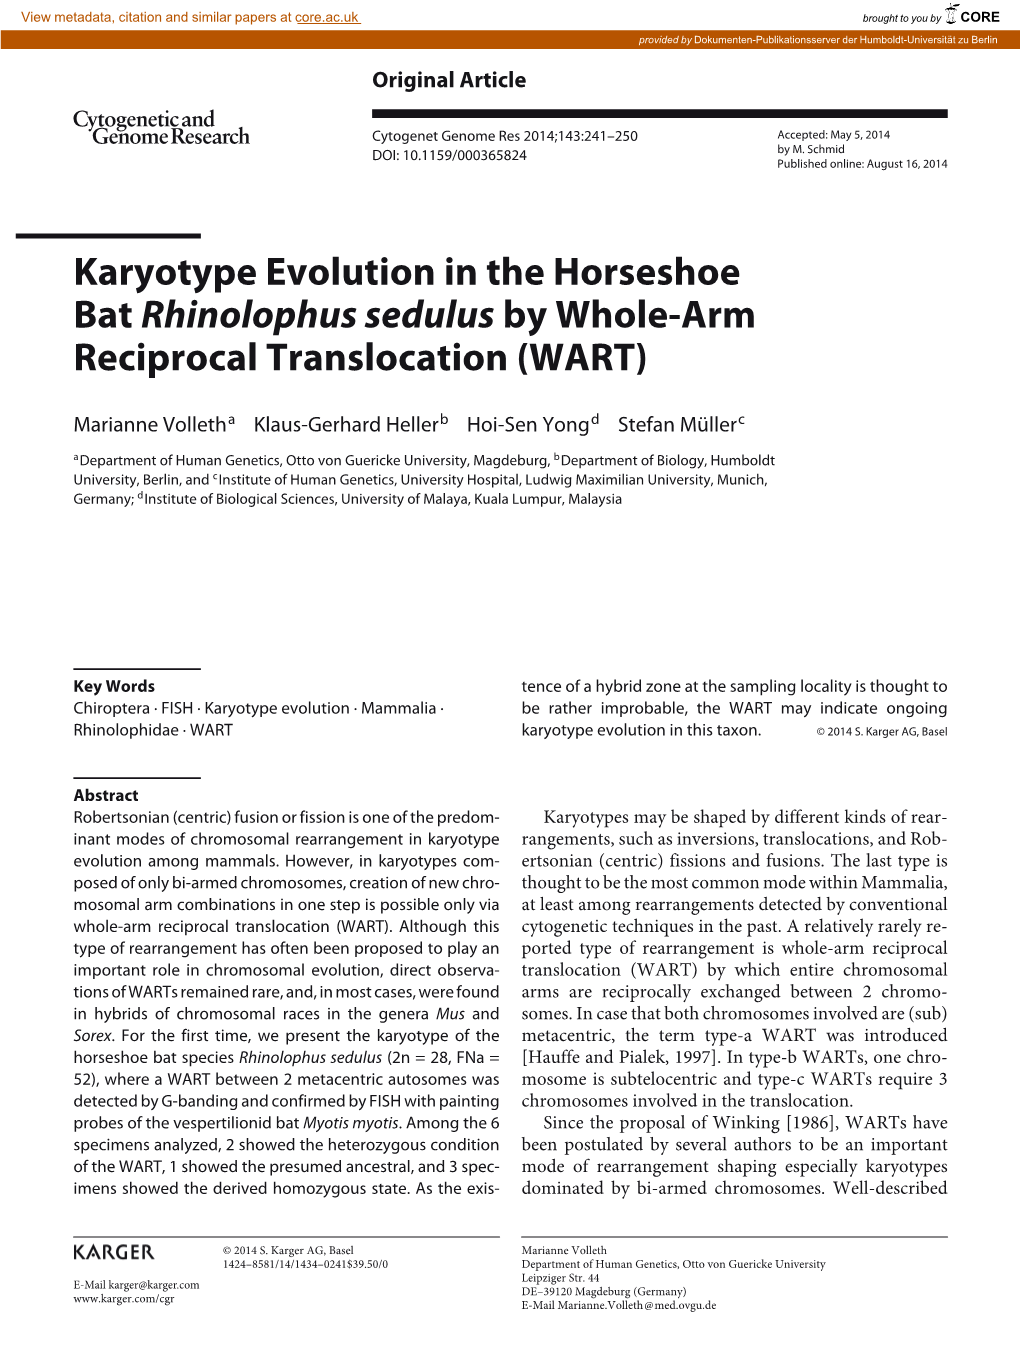 Karyotype Evolution in the Horseshoe Bat Rhinolophus Sedulus by Whole-Arm Reciprocal Translocation (WART)